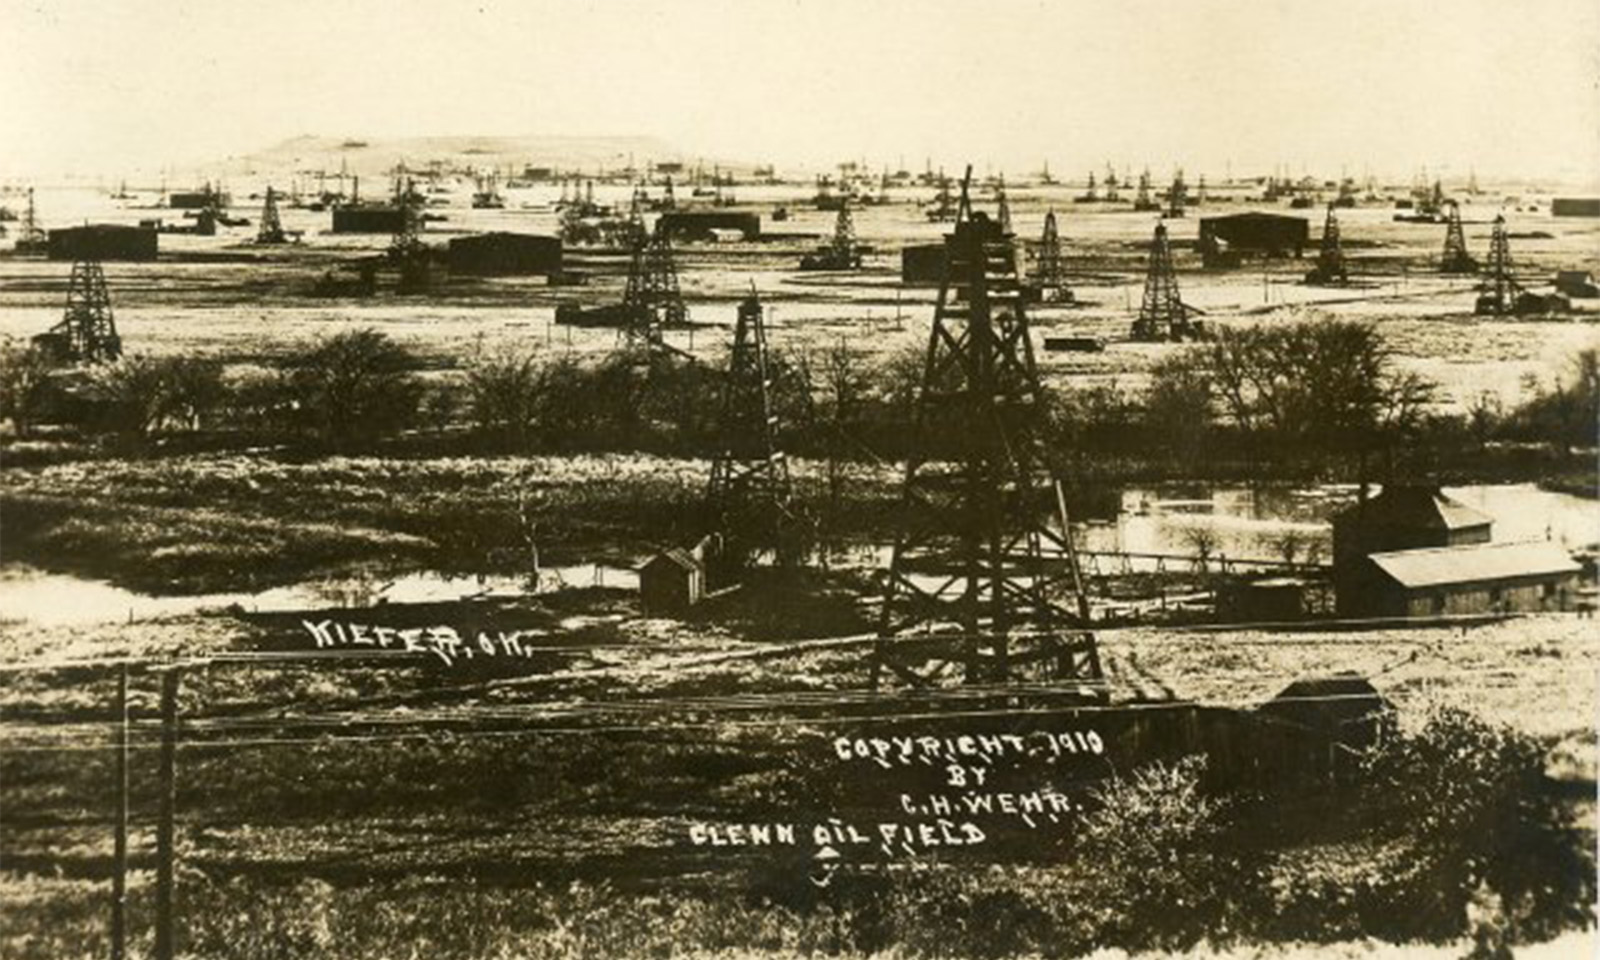 Golden Driller of Tulsa - American Oil & Gas Historical Society